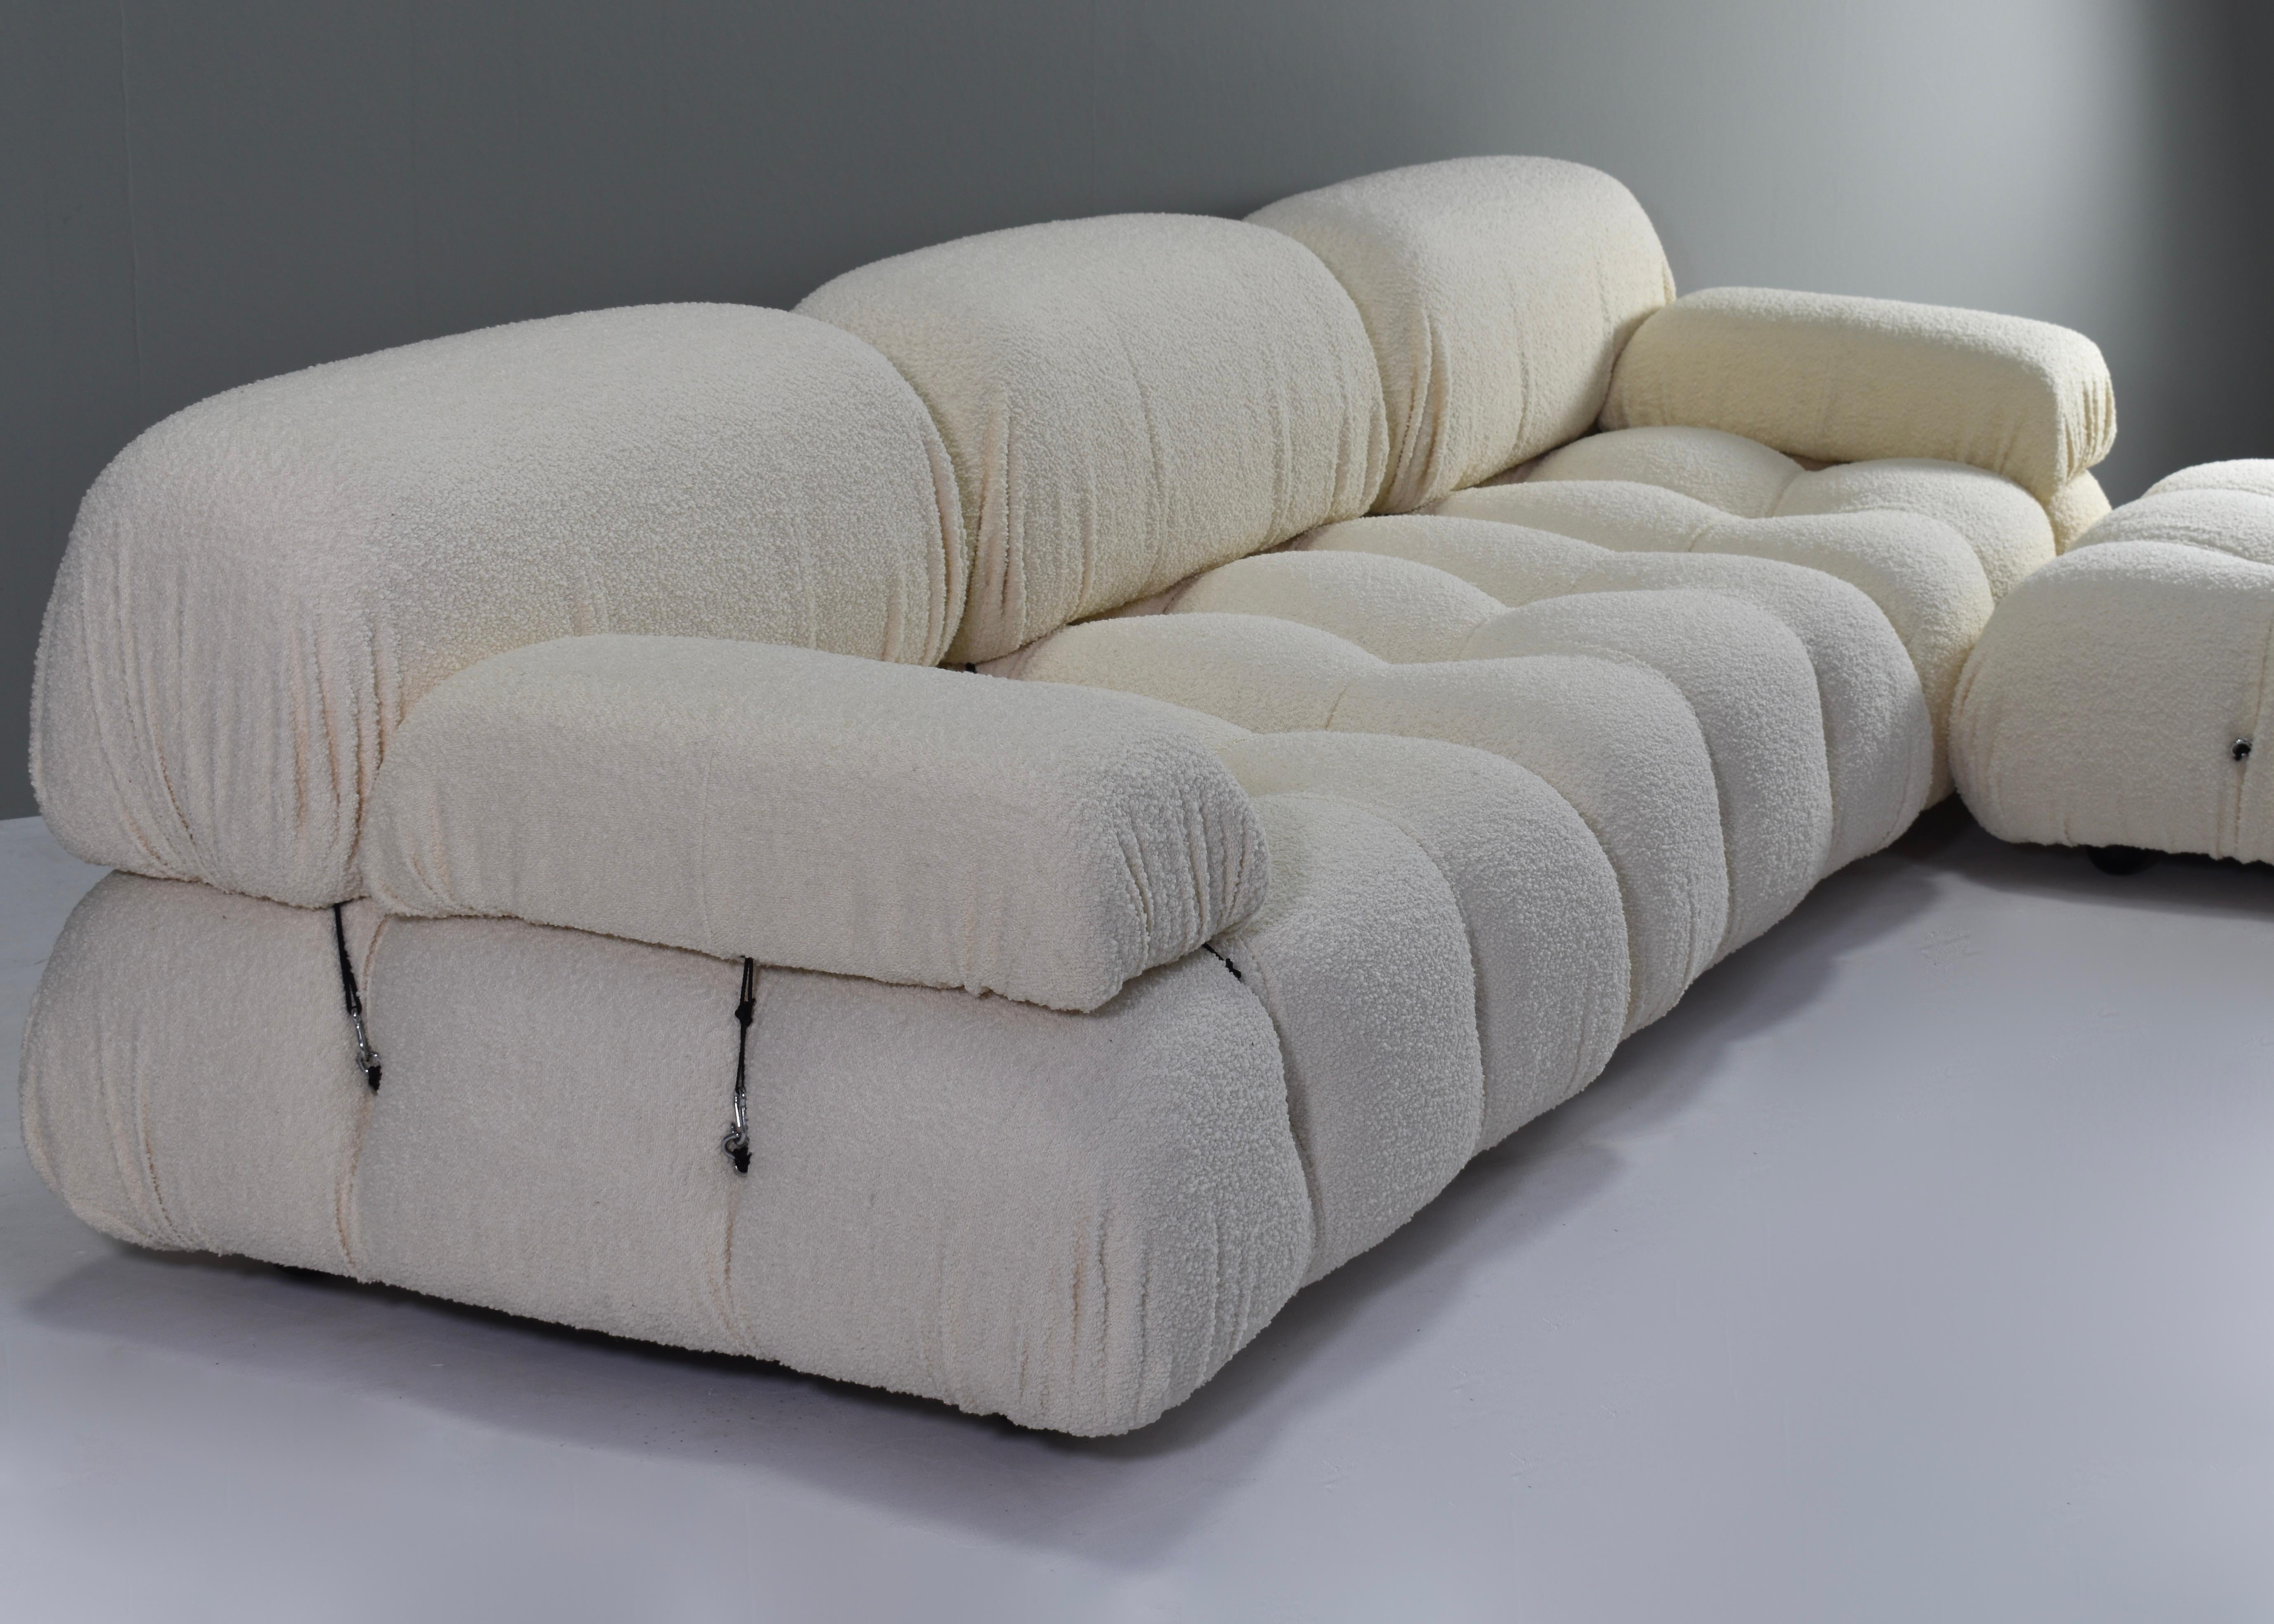 Late 20th Century Camaleonda Sectional Sofa by Mario Bellini for B&B Italia, New Upholstered